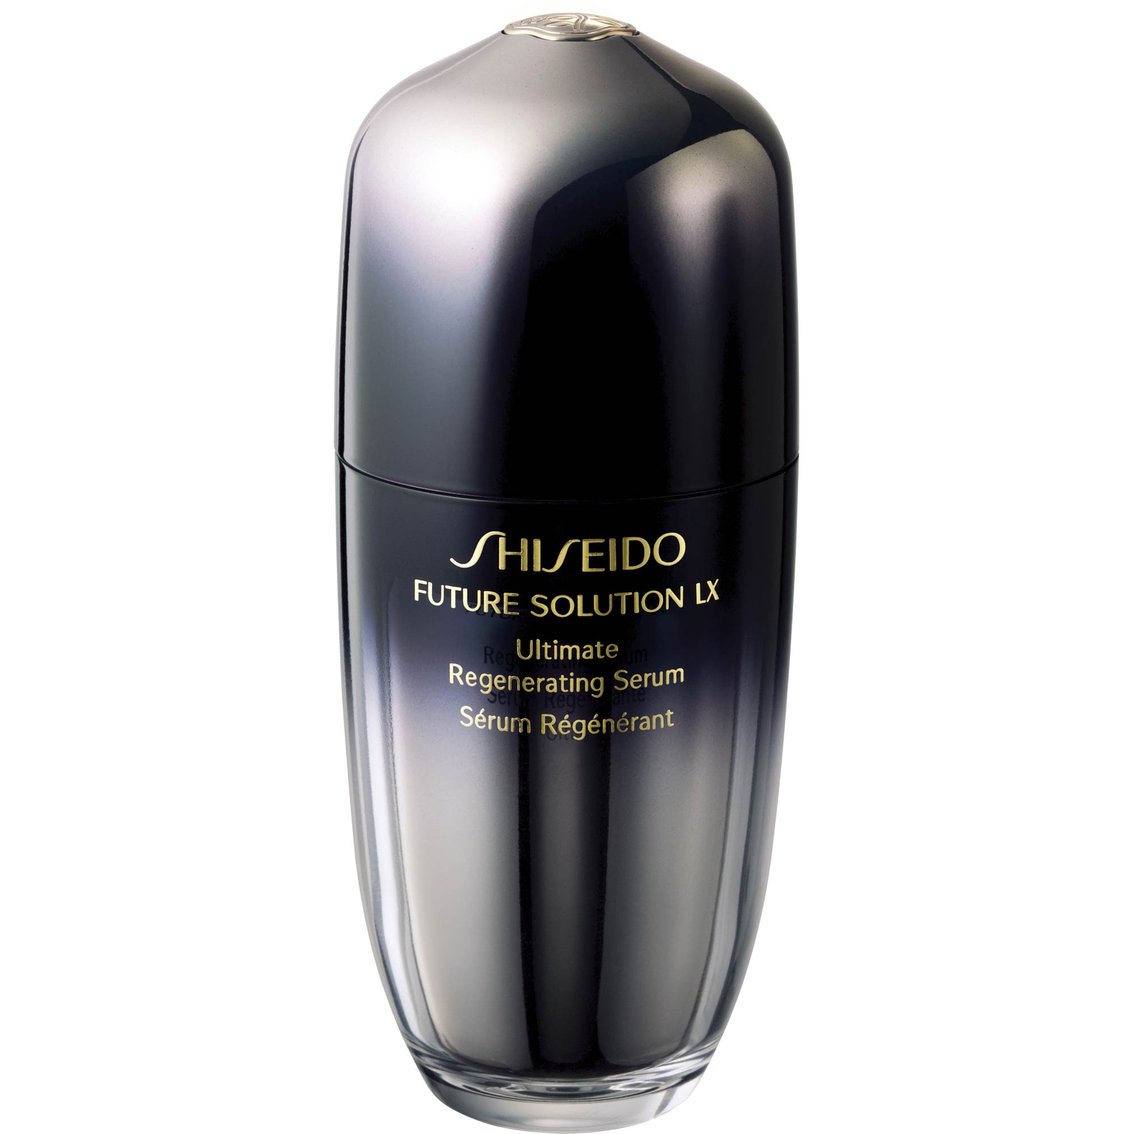 Shiseido solution lx. Сыворотка Shiseido Future solution LX Ultimate Regenerating 30 мл. Shiseido Future solution LX. Shiseido Future solution LX Intensive. Shiseido Ultimate.